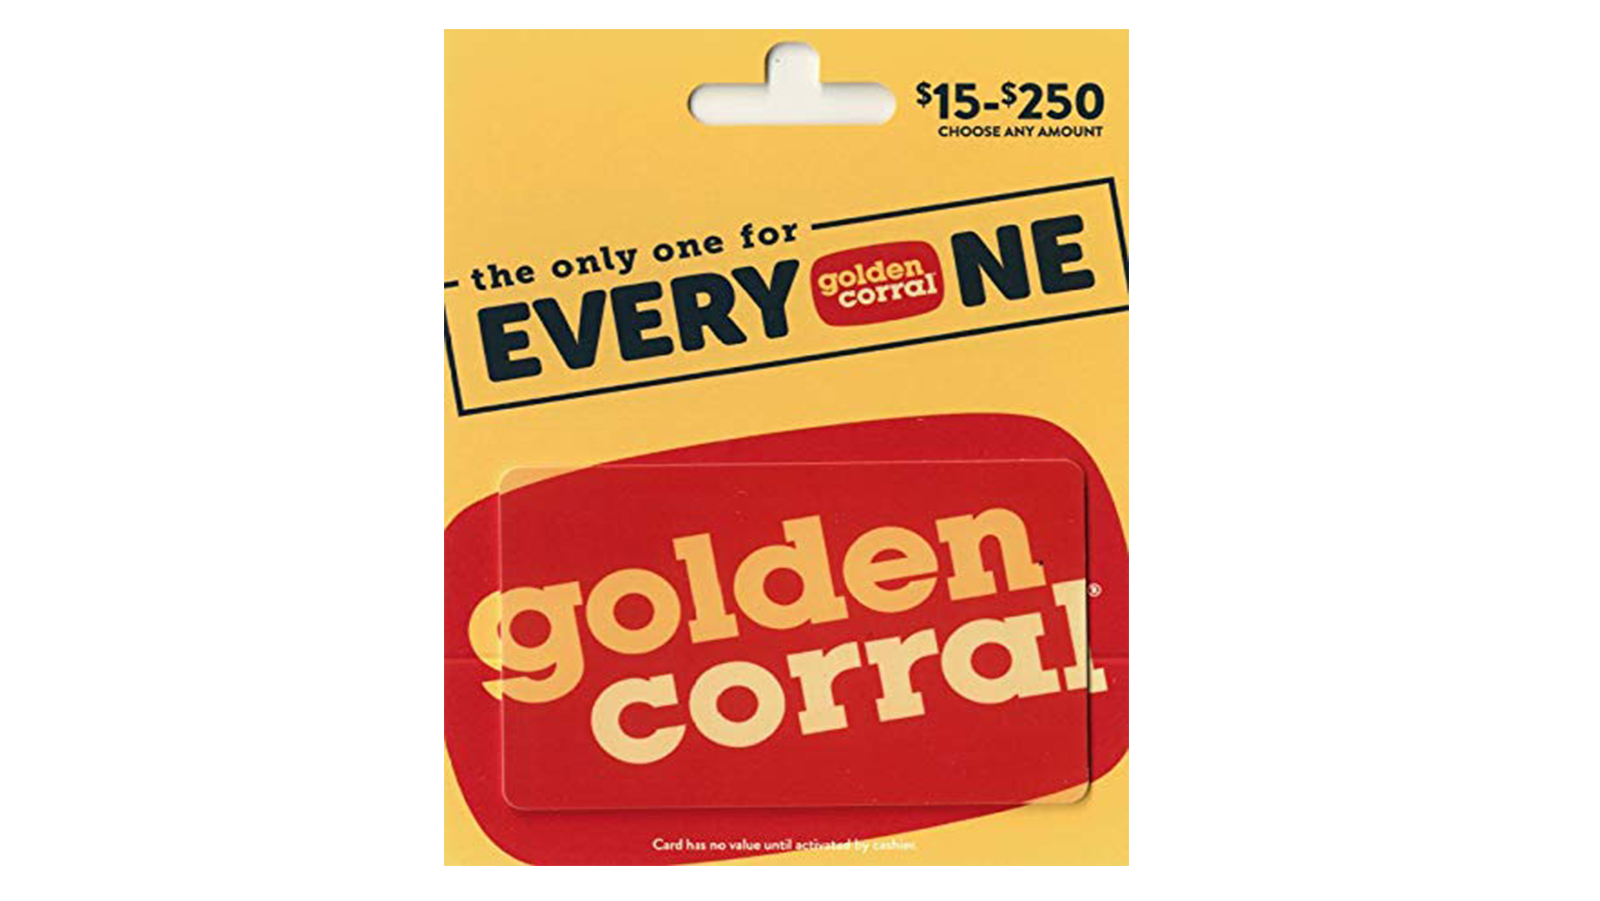 Golden Corral Gift Card